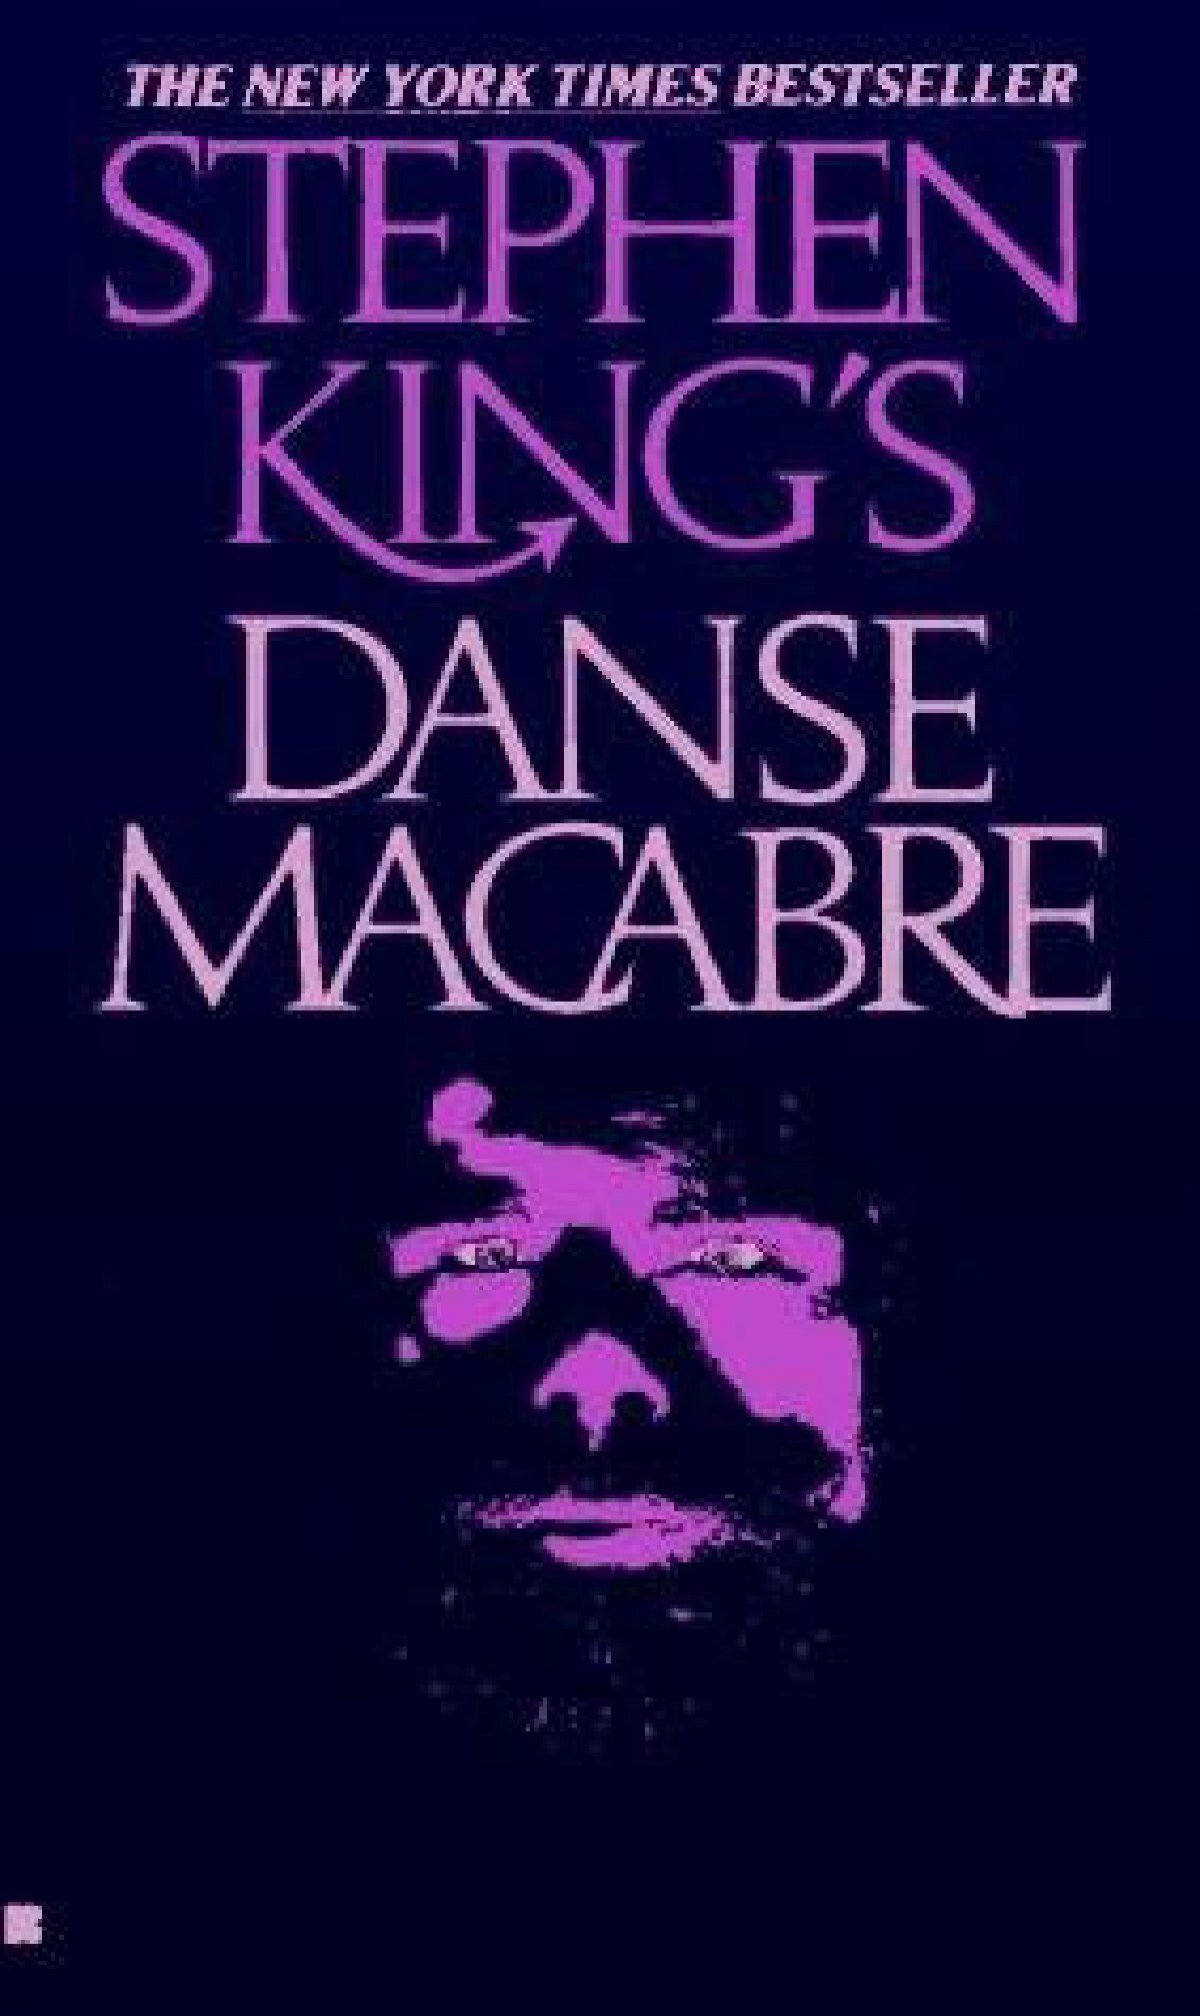 King, Stephen - Danse Macabre.pdf - Retro Cafe